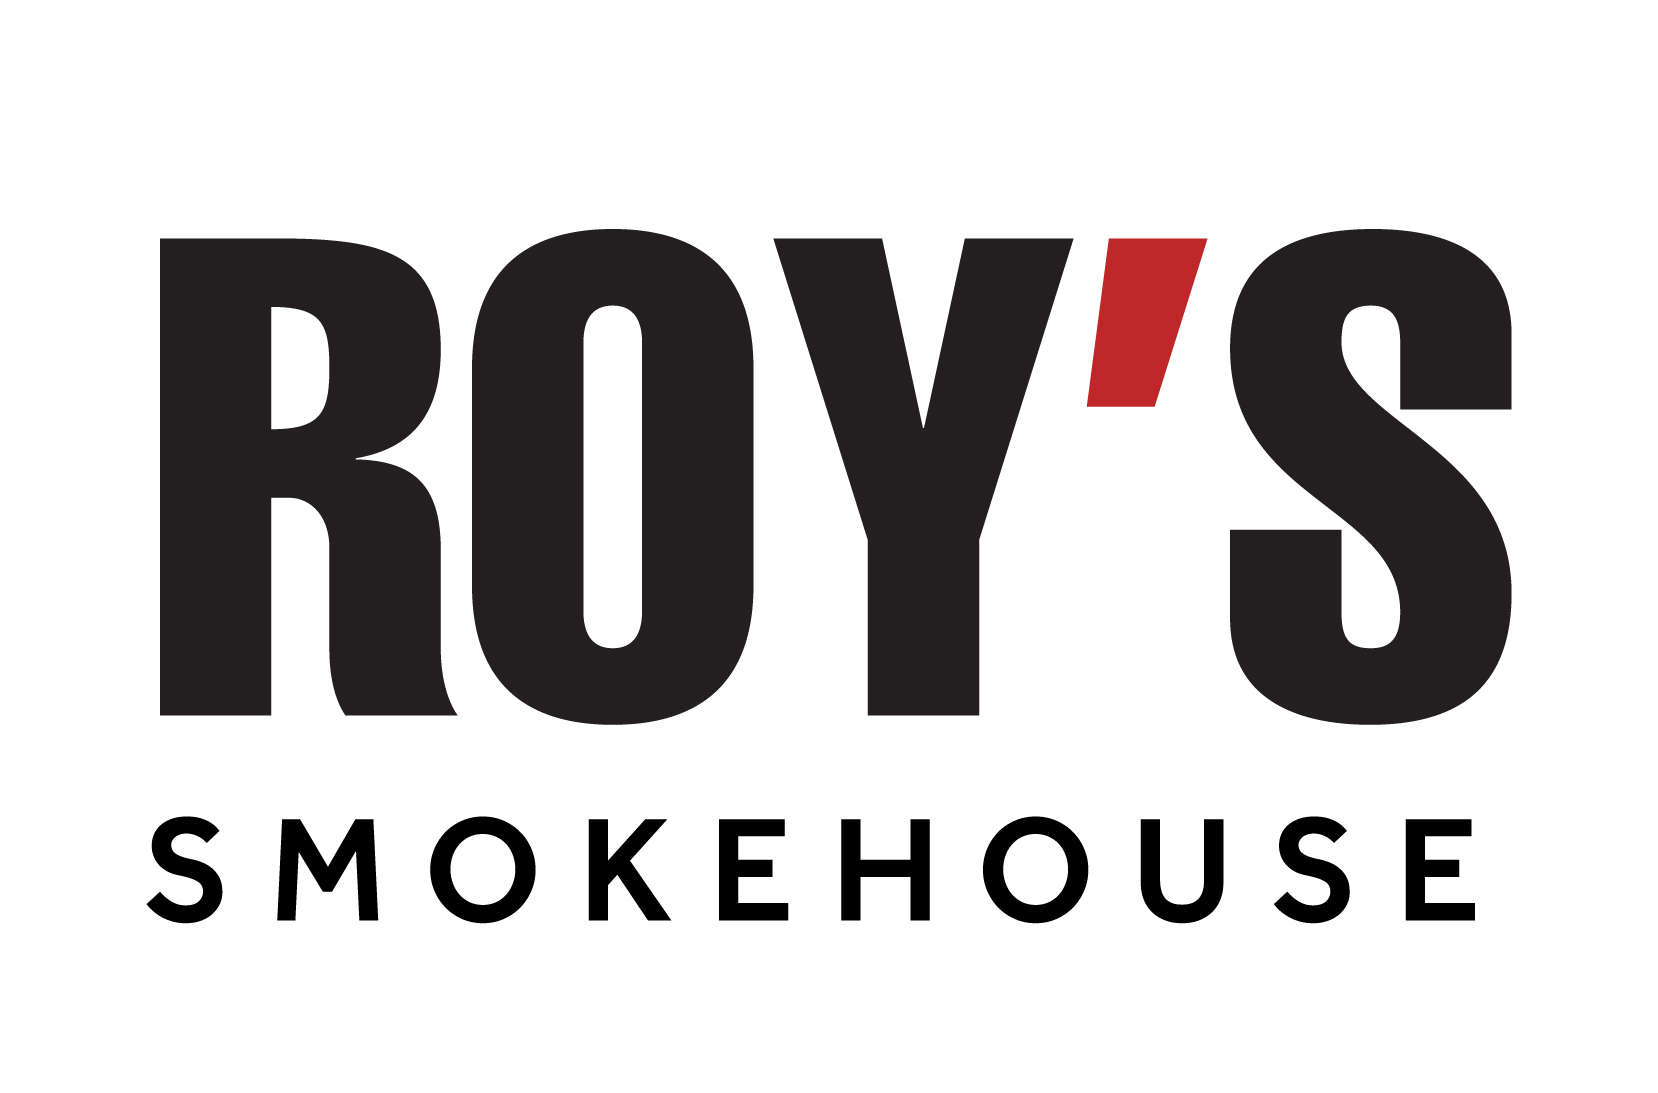 Roy's Smokehouse, Cairo Marriott Hotel & Omar Khayyam Casino - More ...